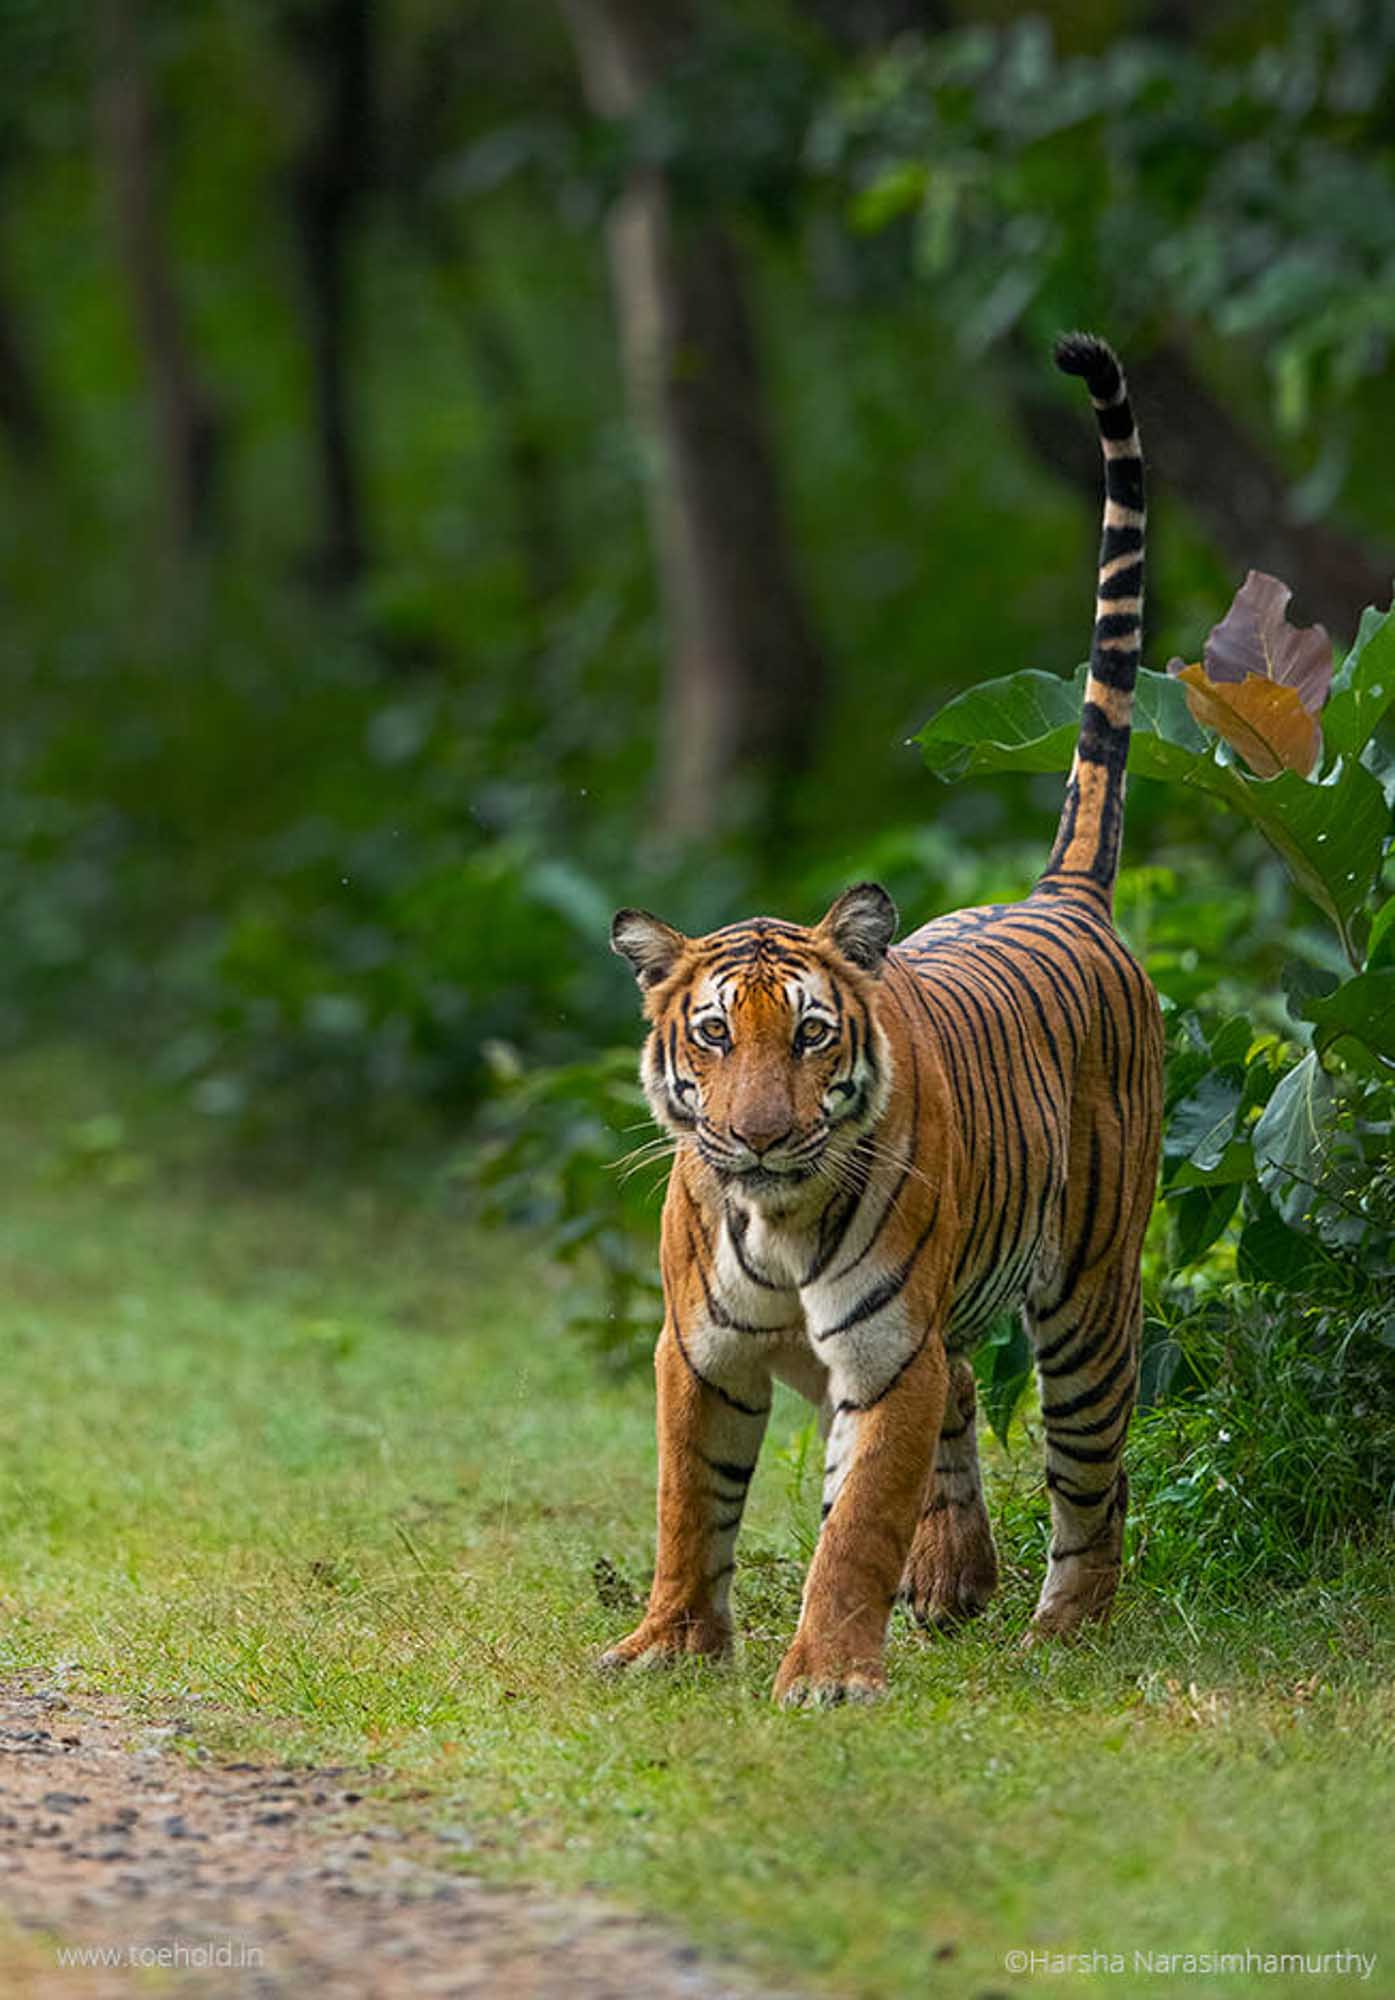 Tiger marking